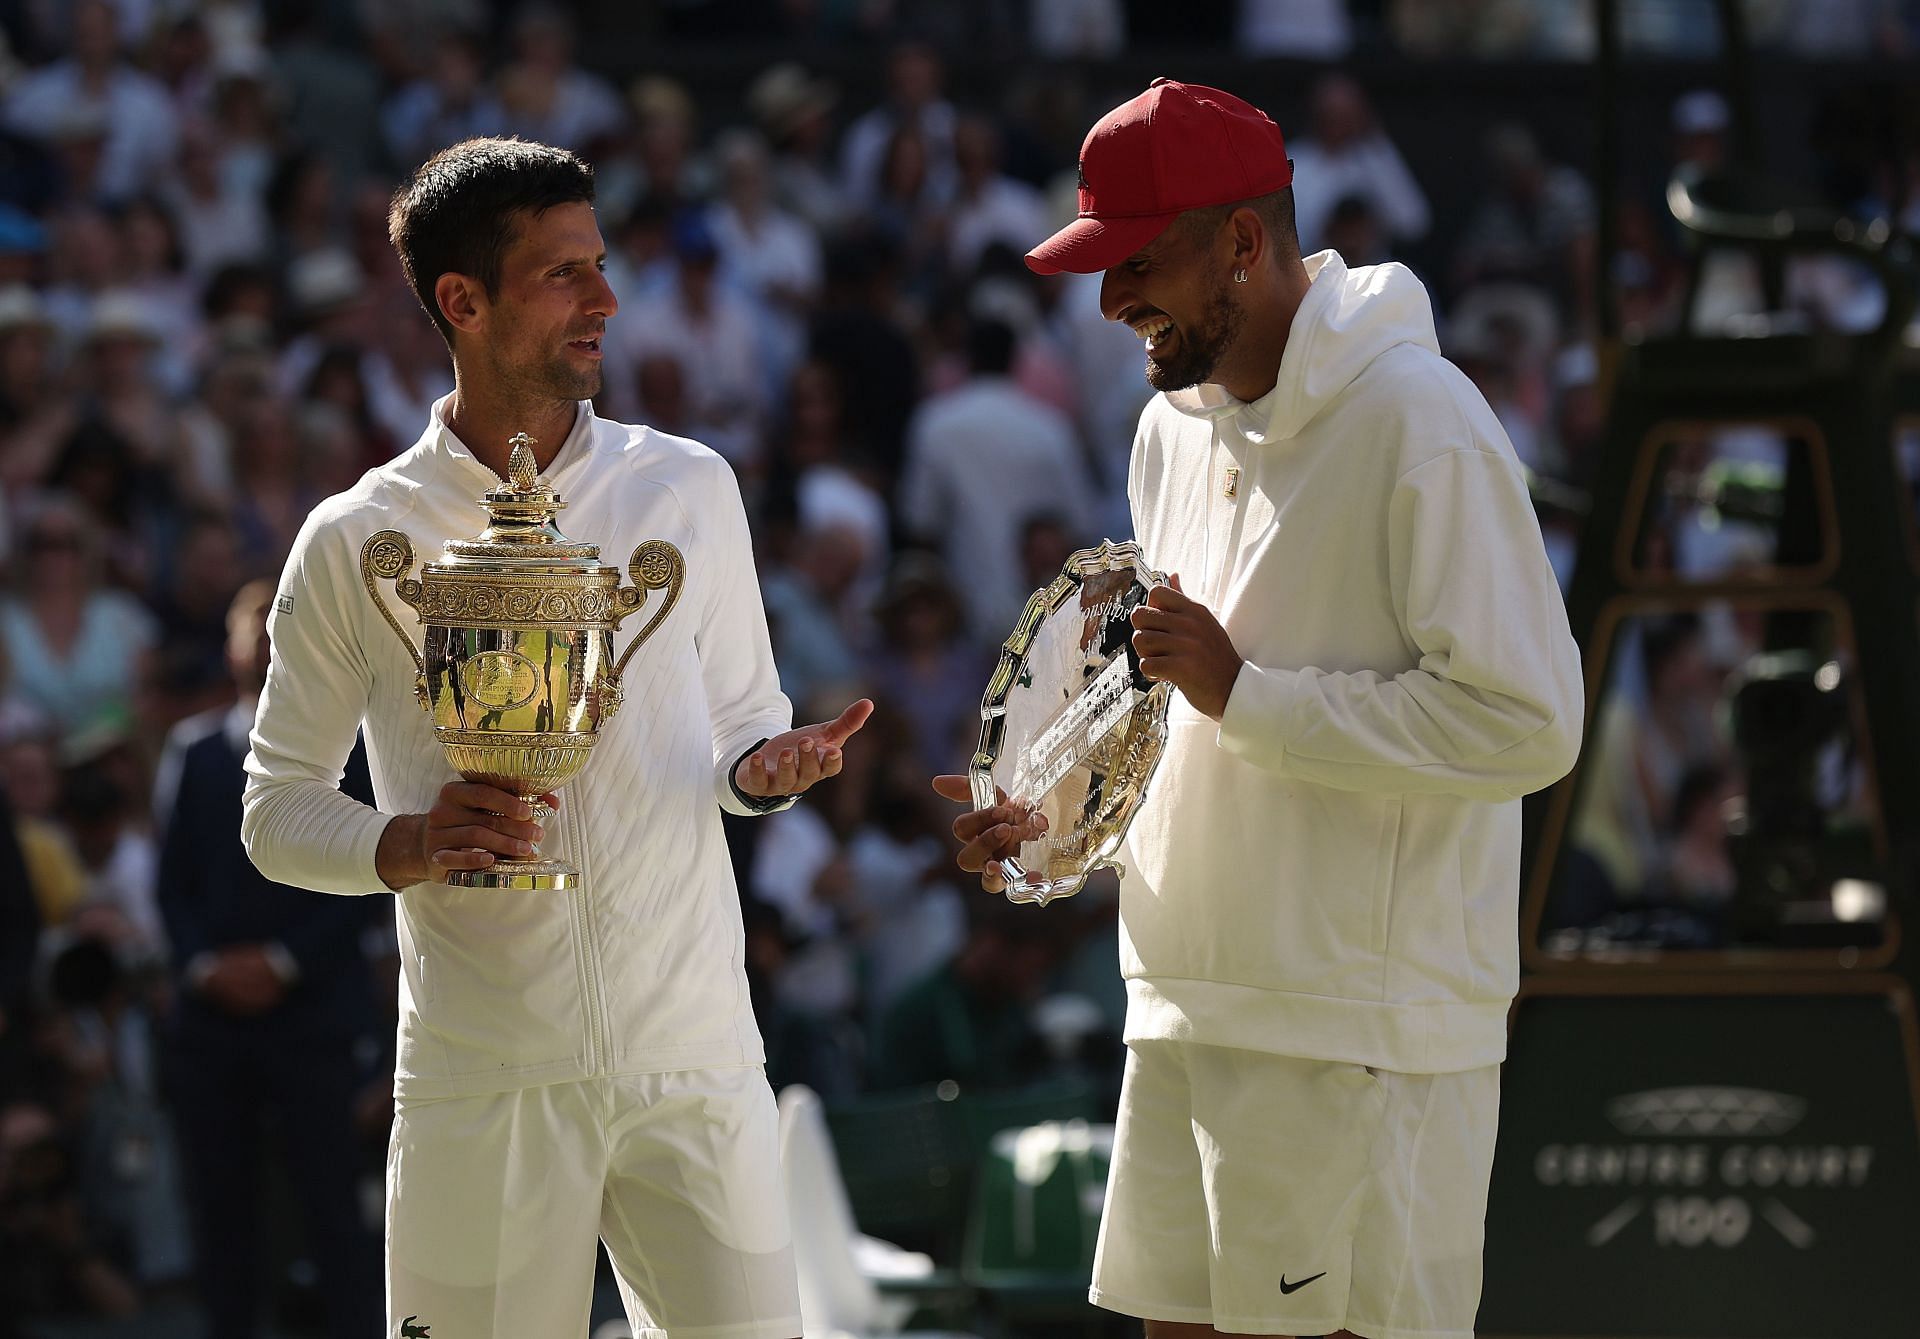 Novak Djokovic and Nick Kyrgios pictured during the 2022 Wimbledon Championships